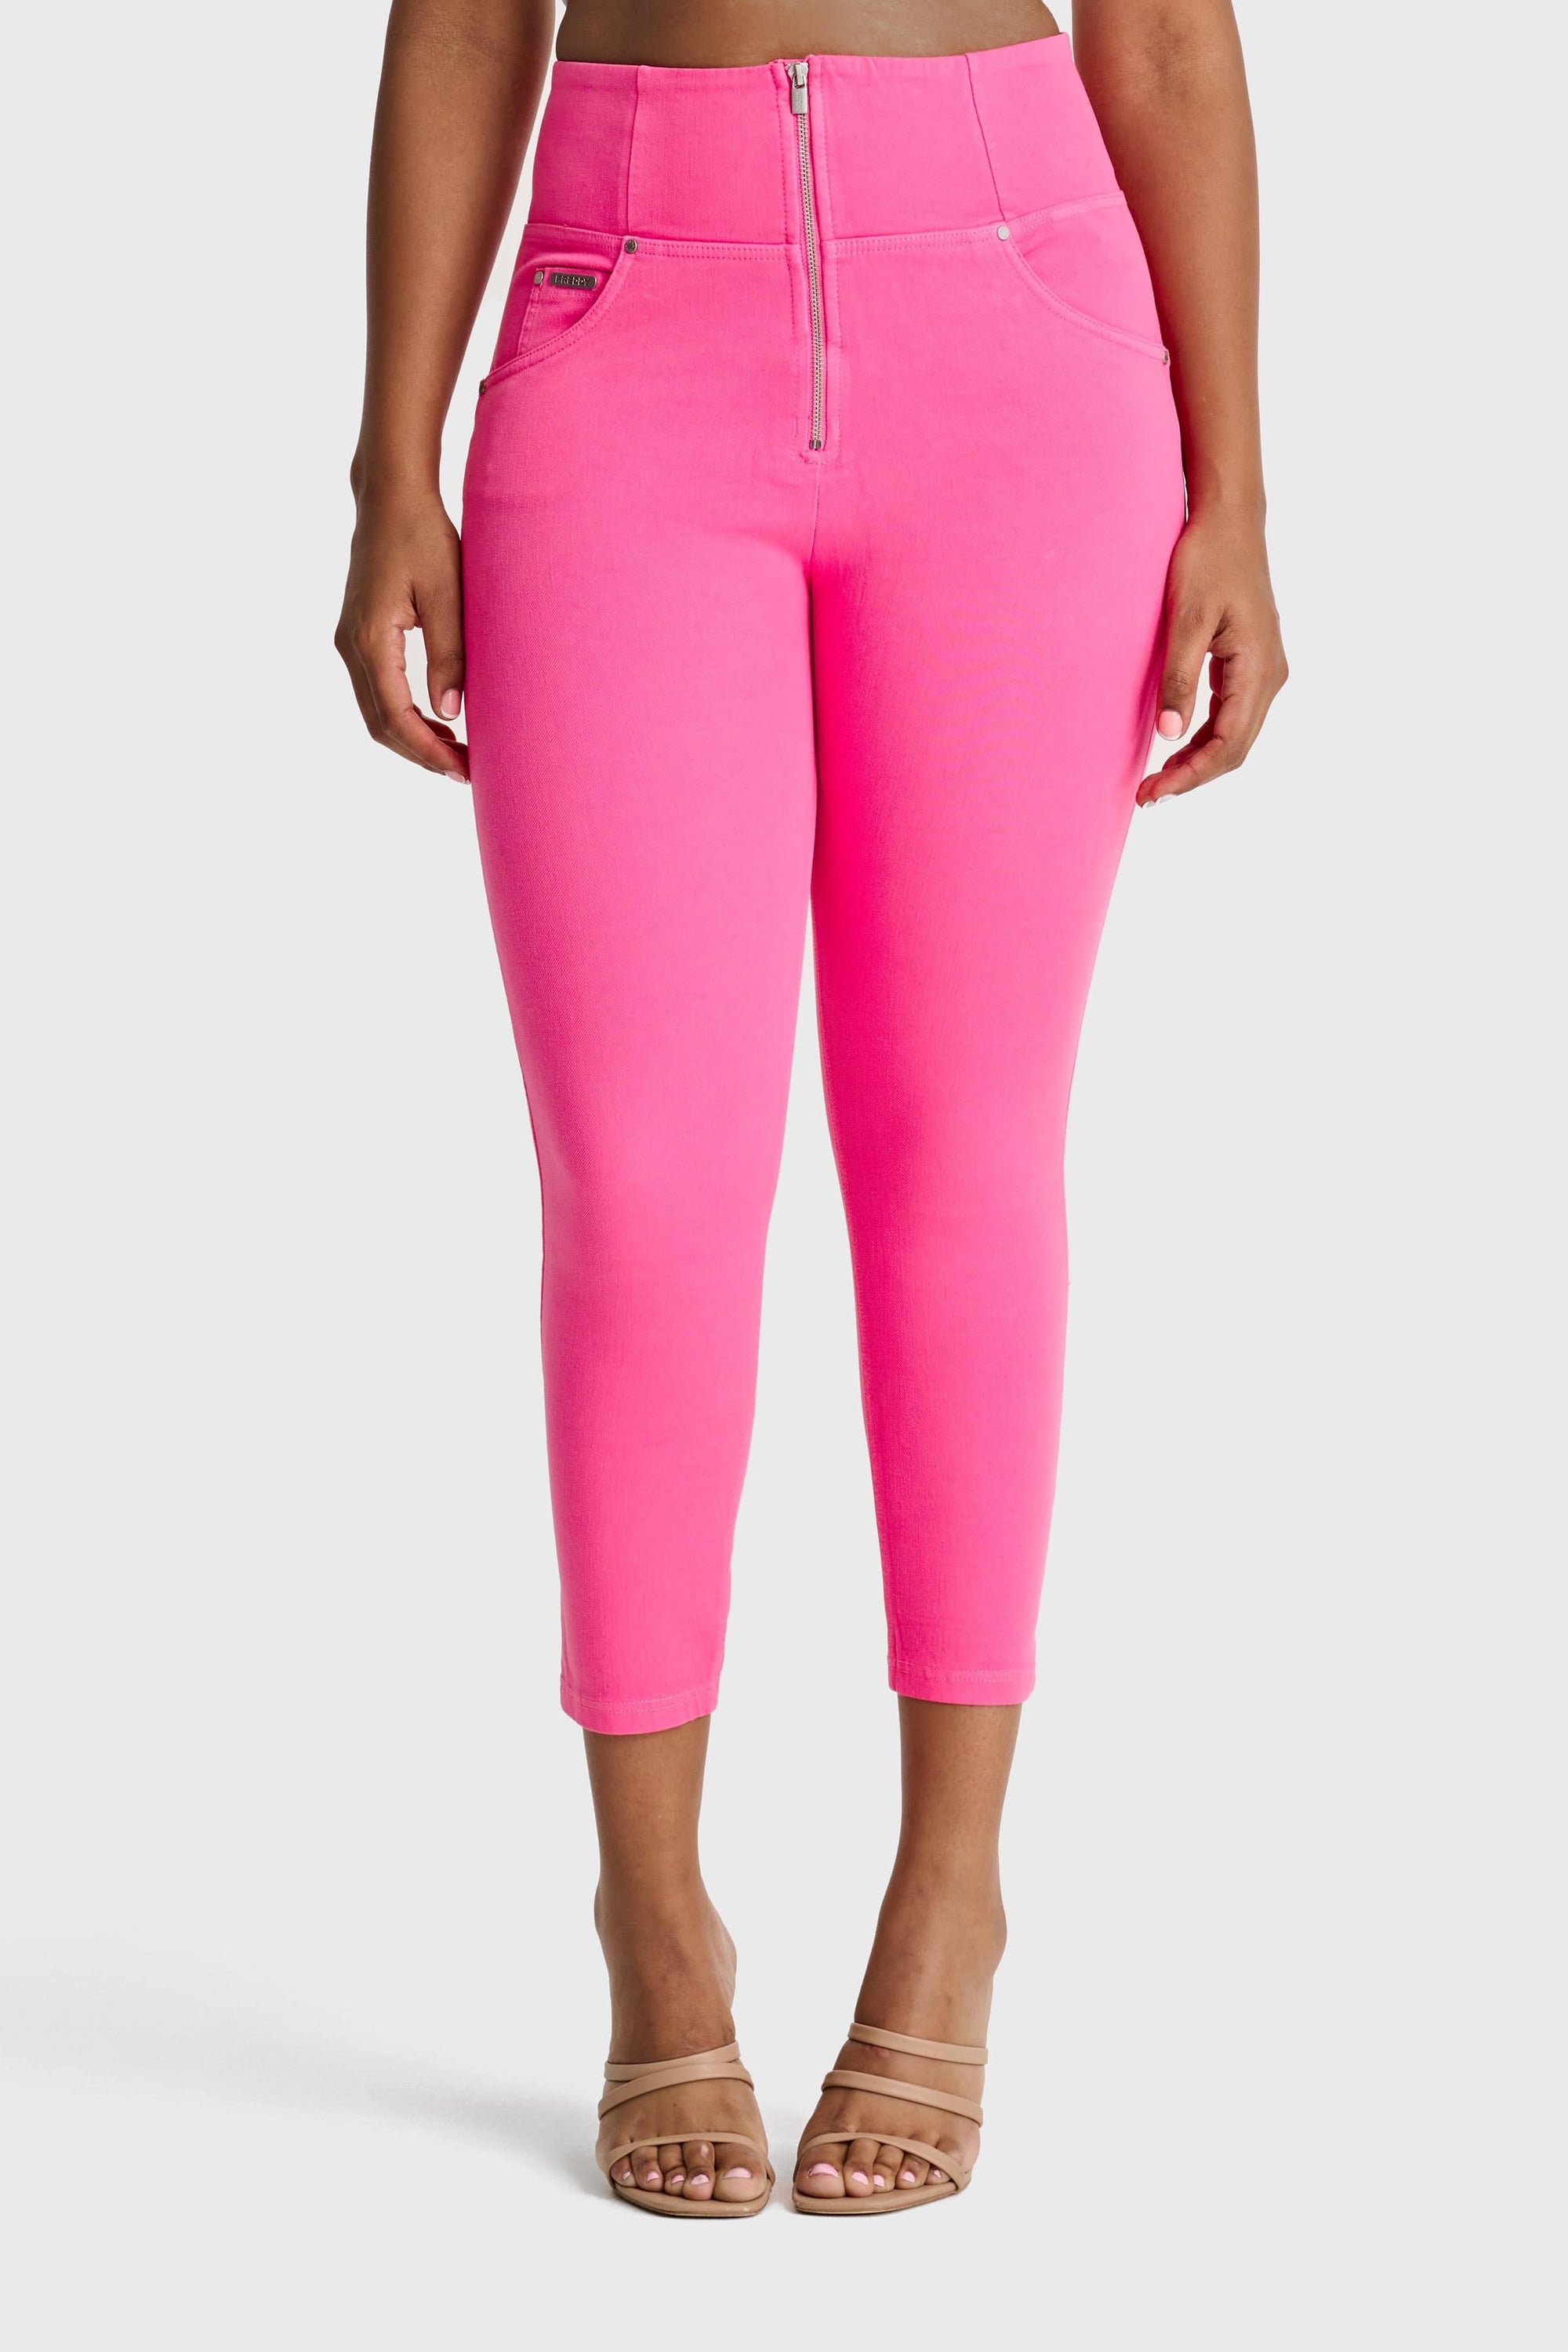 WR.UP® Snug Curvy Jeans - High Waisted - 7/8 Length - Candy Pink 4